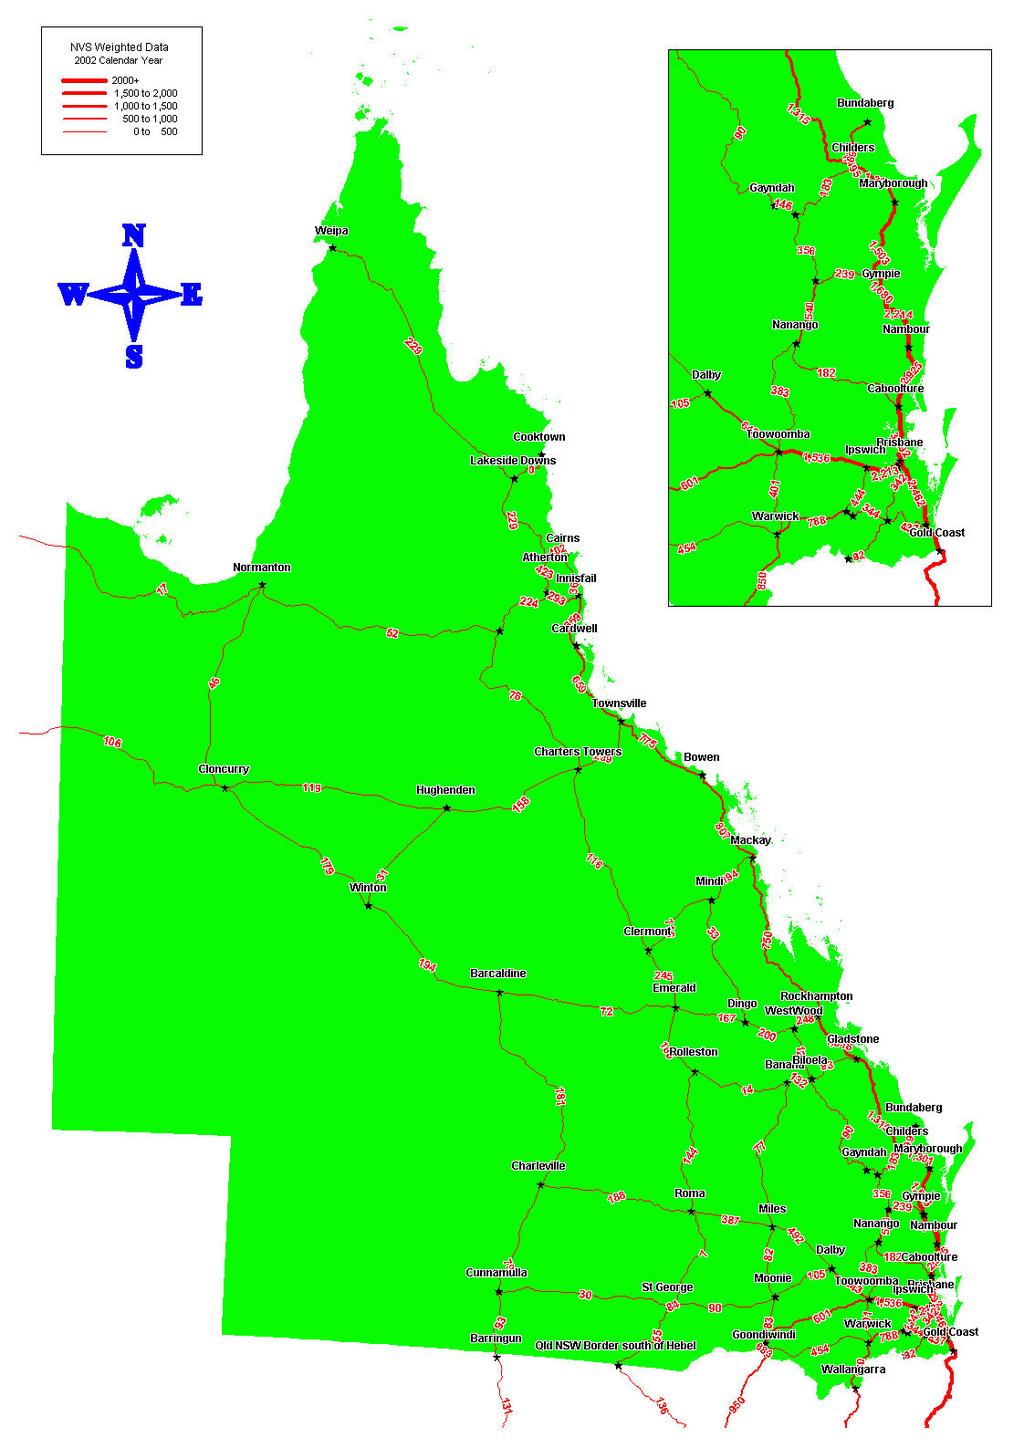 Figure 4 Visitor flows for Queensland (estimated, preliminary